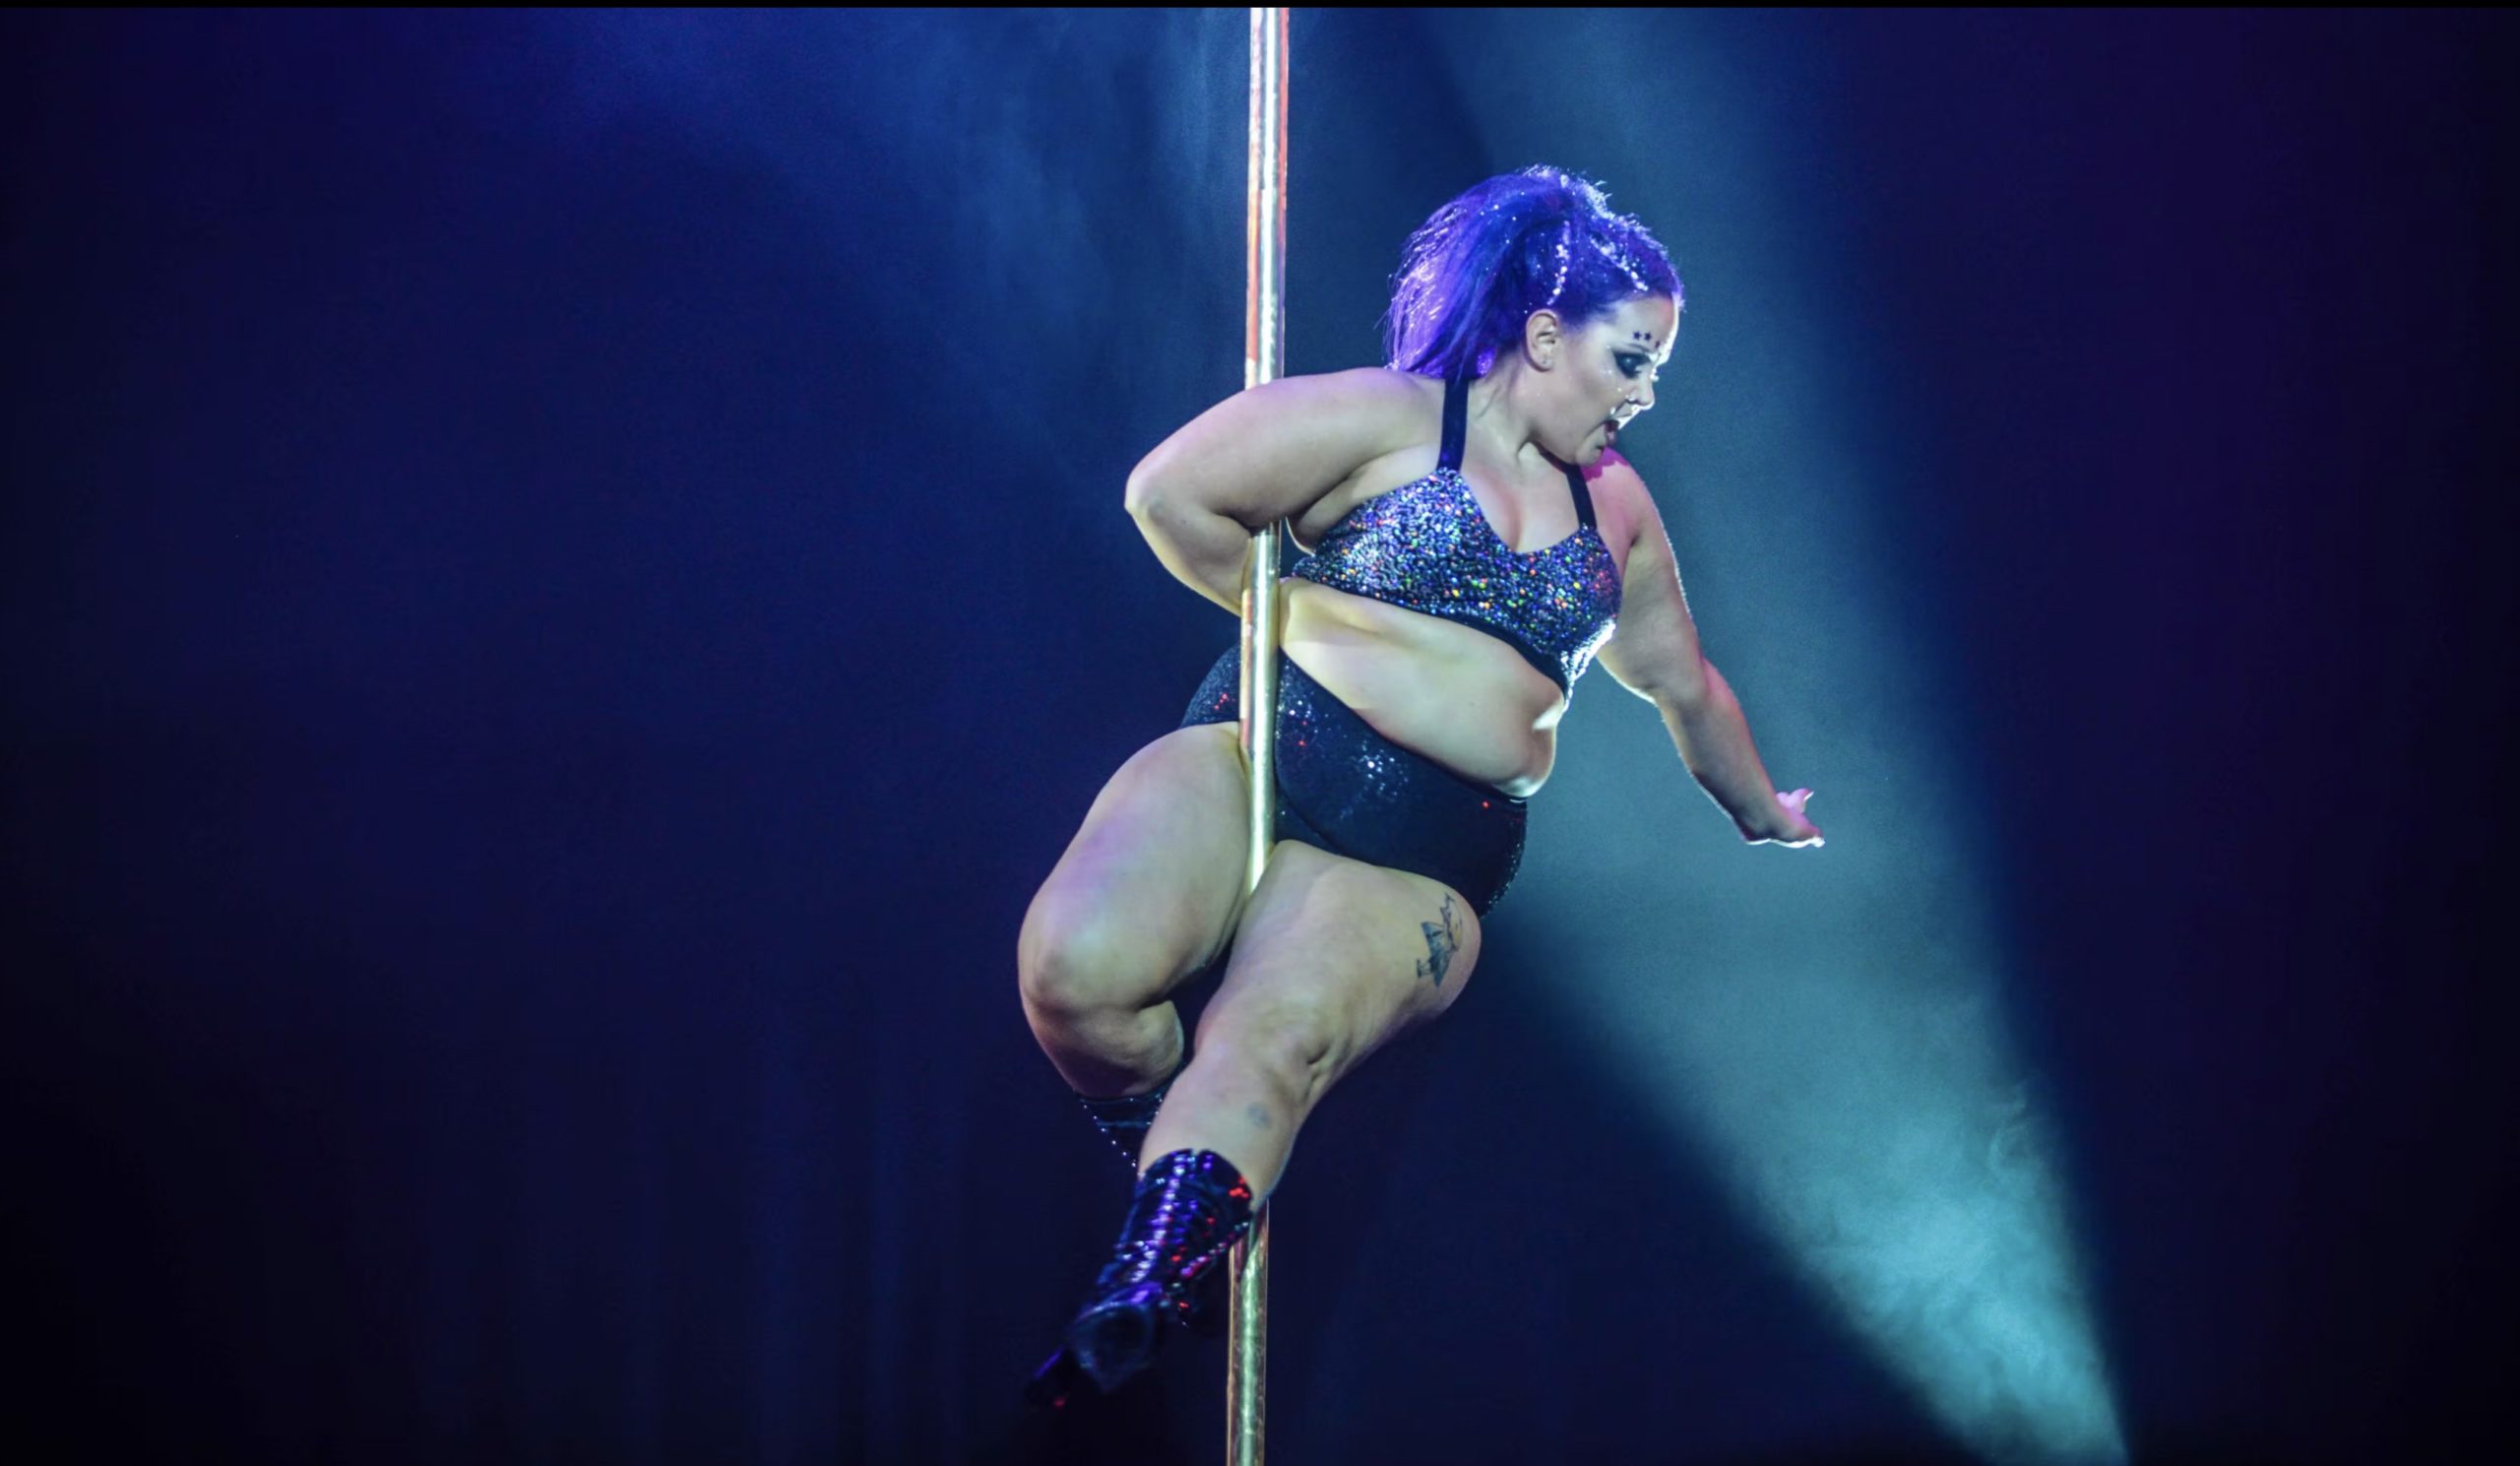 Female Pole Dancer Performer